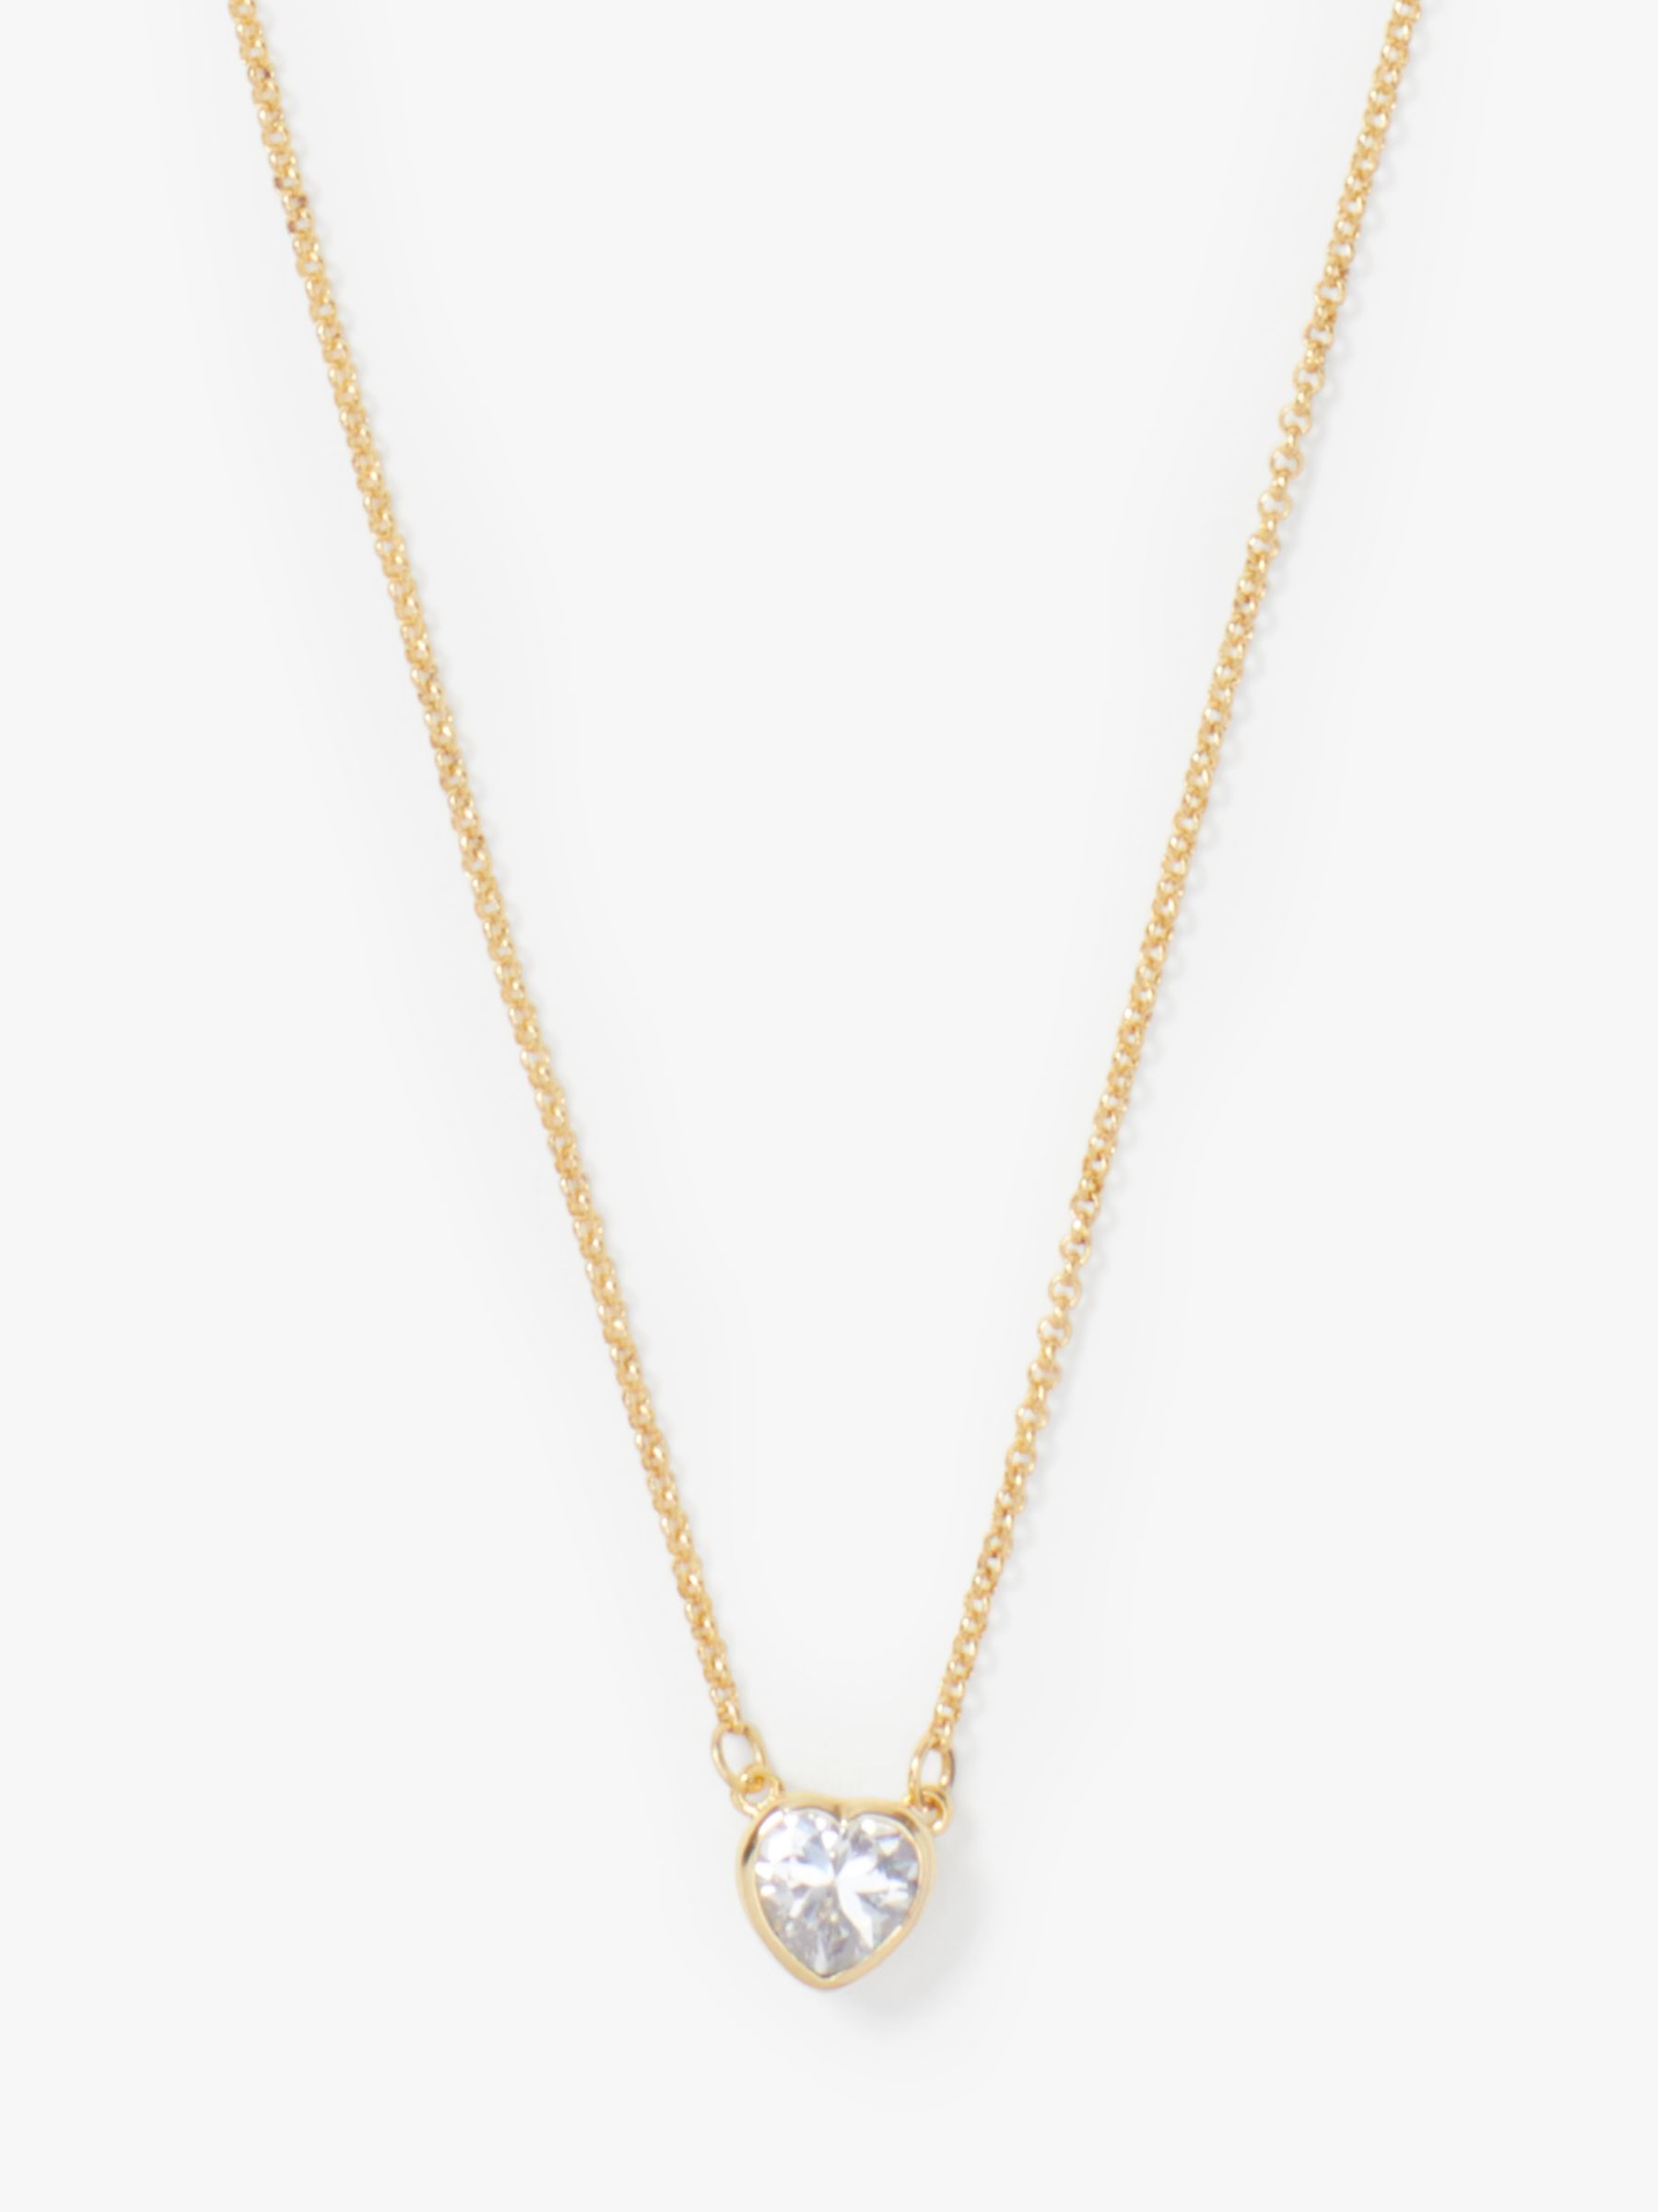 kate spade new york Mini Heart Pendant Necklace, Gold/Clear at John